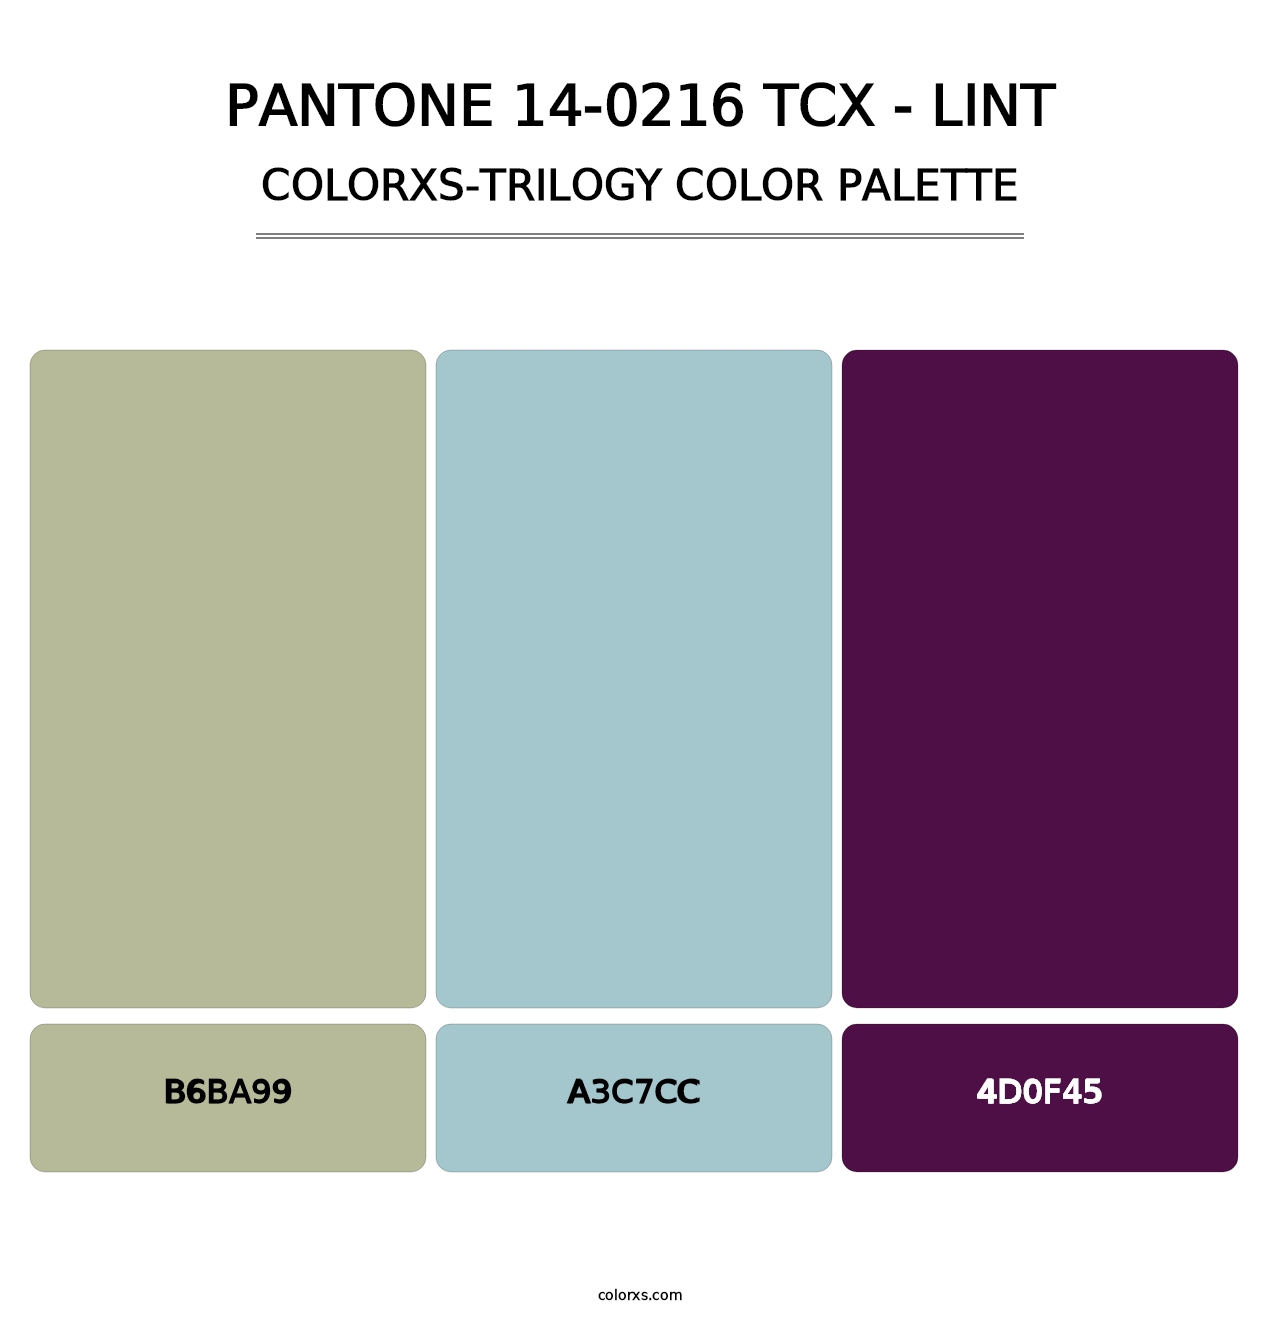 PANTONE 14-0216 TCX - Lint - Colorxs Trilogy Palette